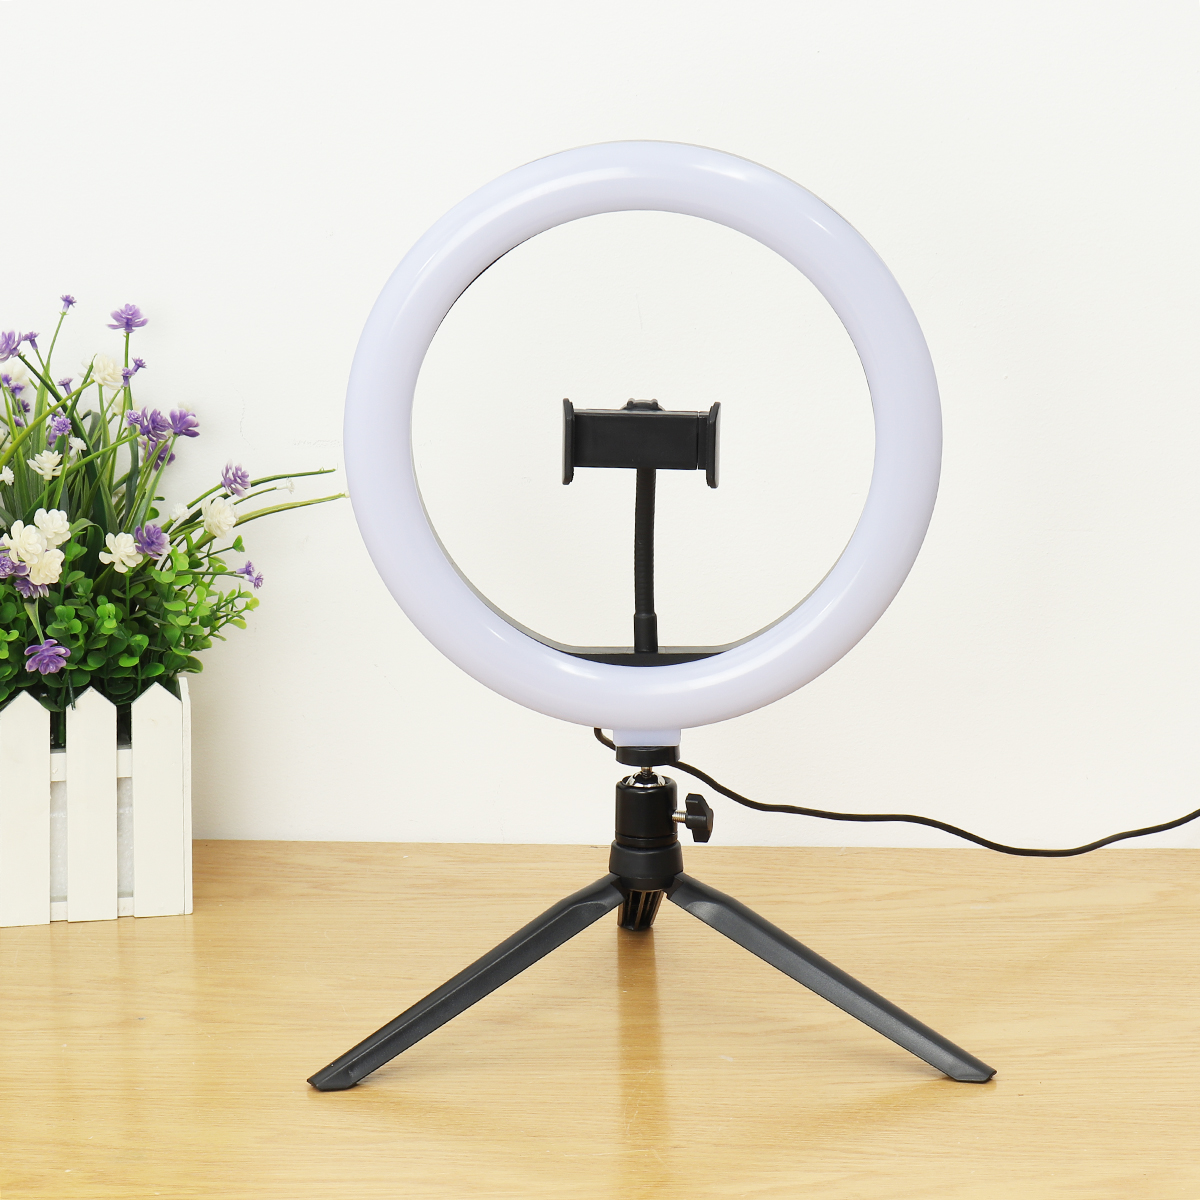 102-inch-Diameter-10-Brightness-RGB-LED-Makeup-Fill-Light-Selfie-Ring-Lamp-Phone-Holder-Tripod-Stand-1788455-11